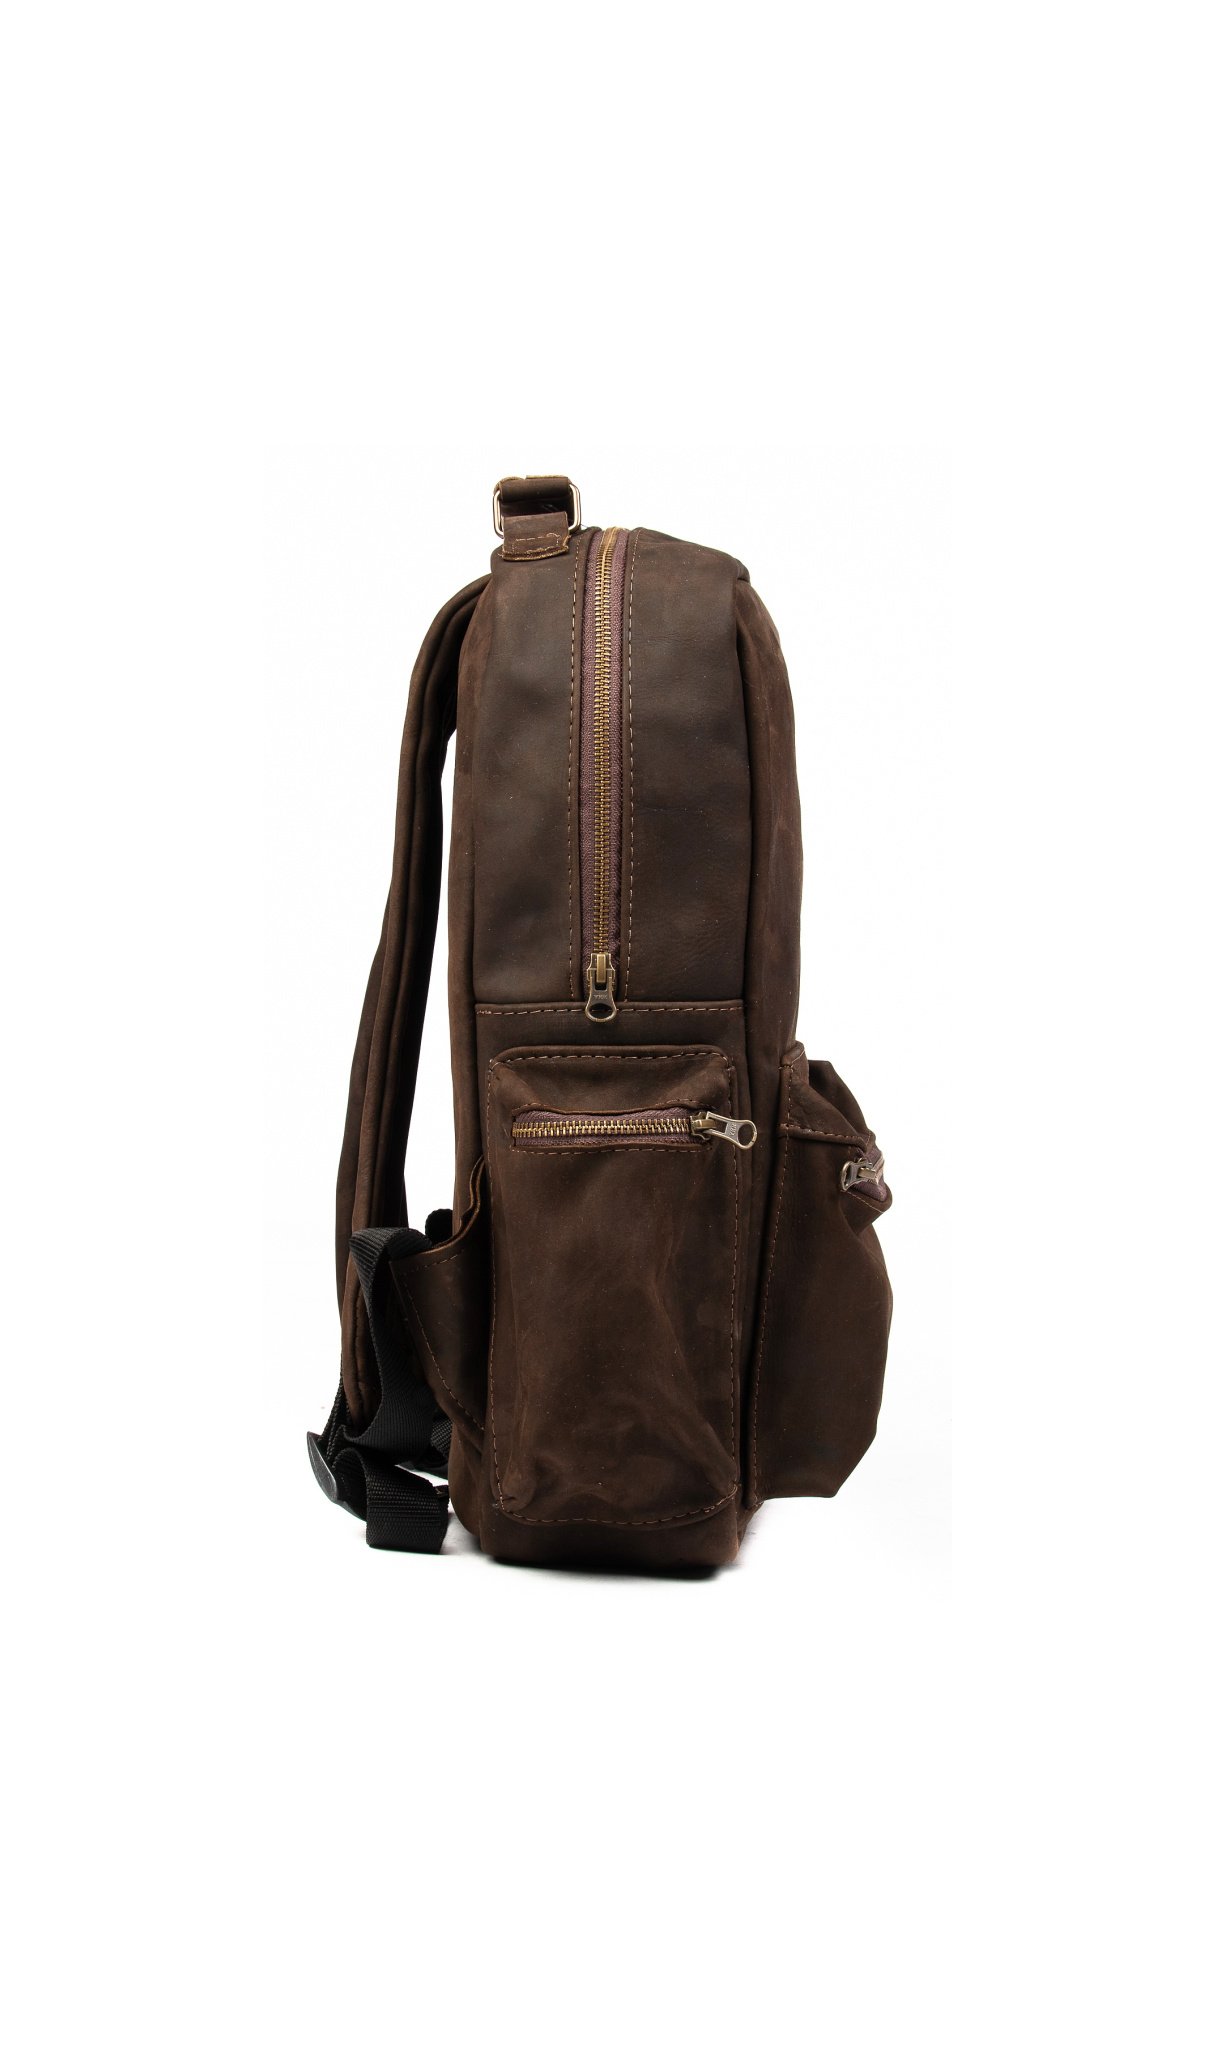 Genuine Leather Luxury Shoulder Bag Women Backpack Female Sac A Dos Tote  Purse | eBay